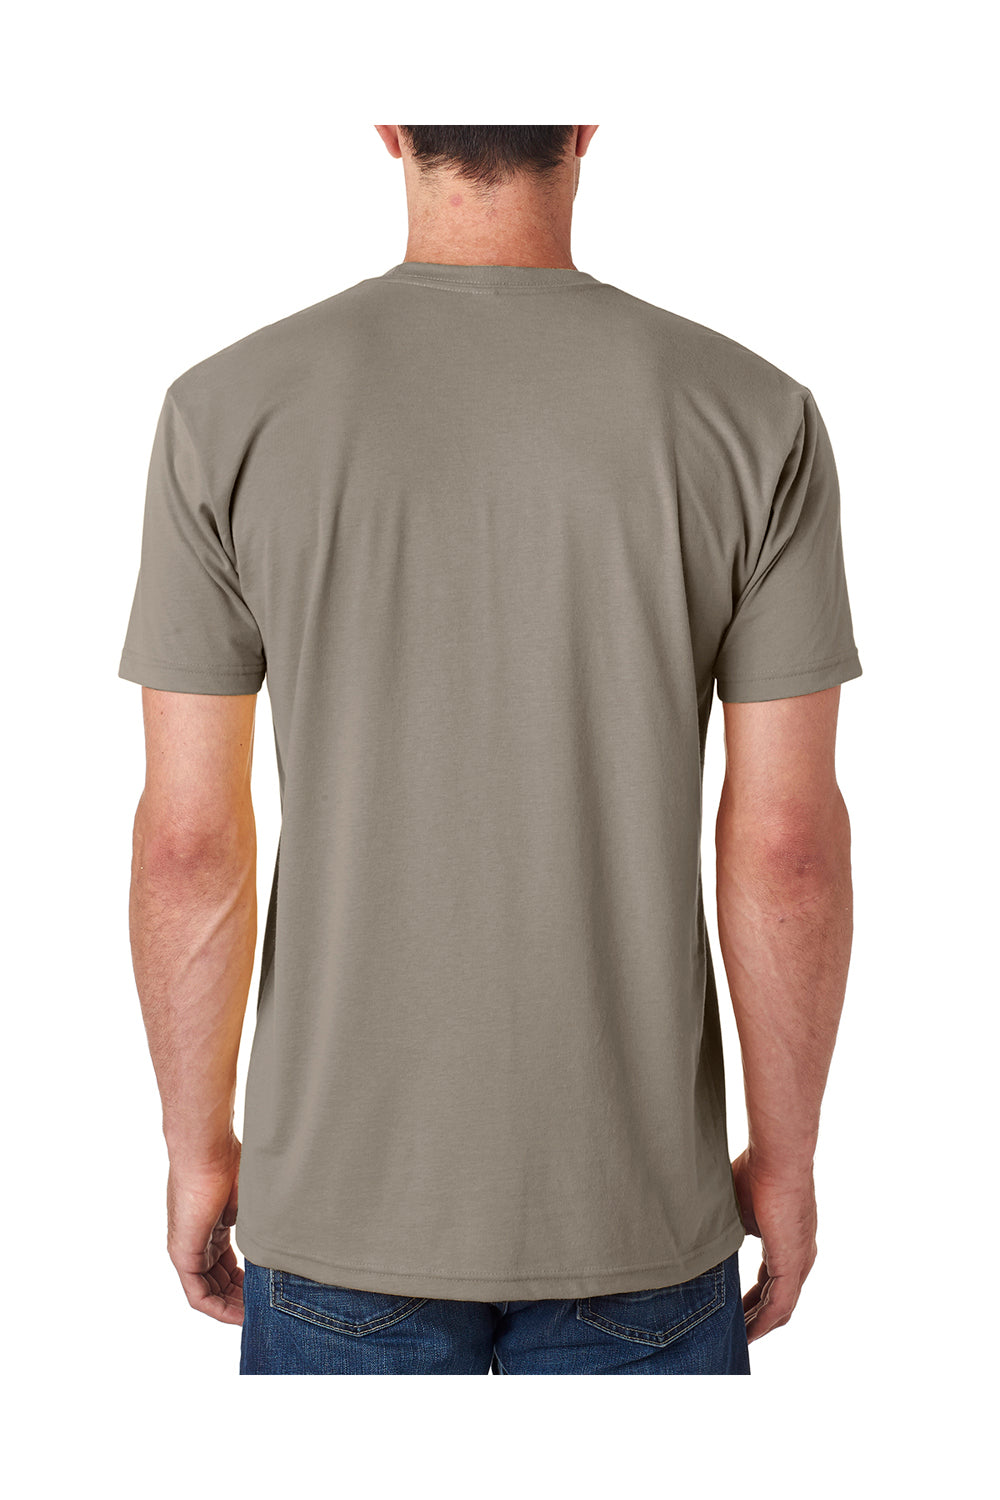 Next Level 6410 Mens Sueded Jersey Short Sleeve Crewneck T-Shirt Warm Grey Back